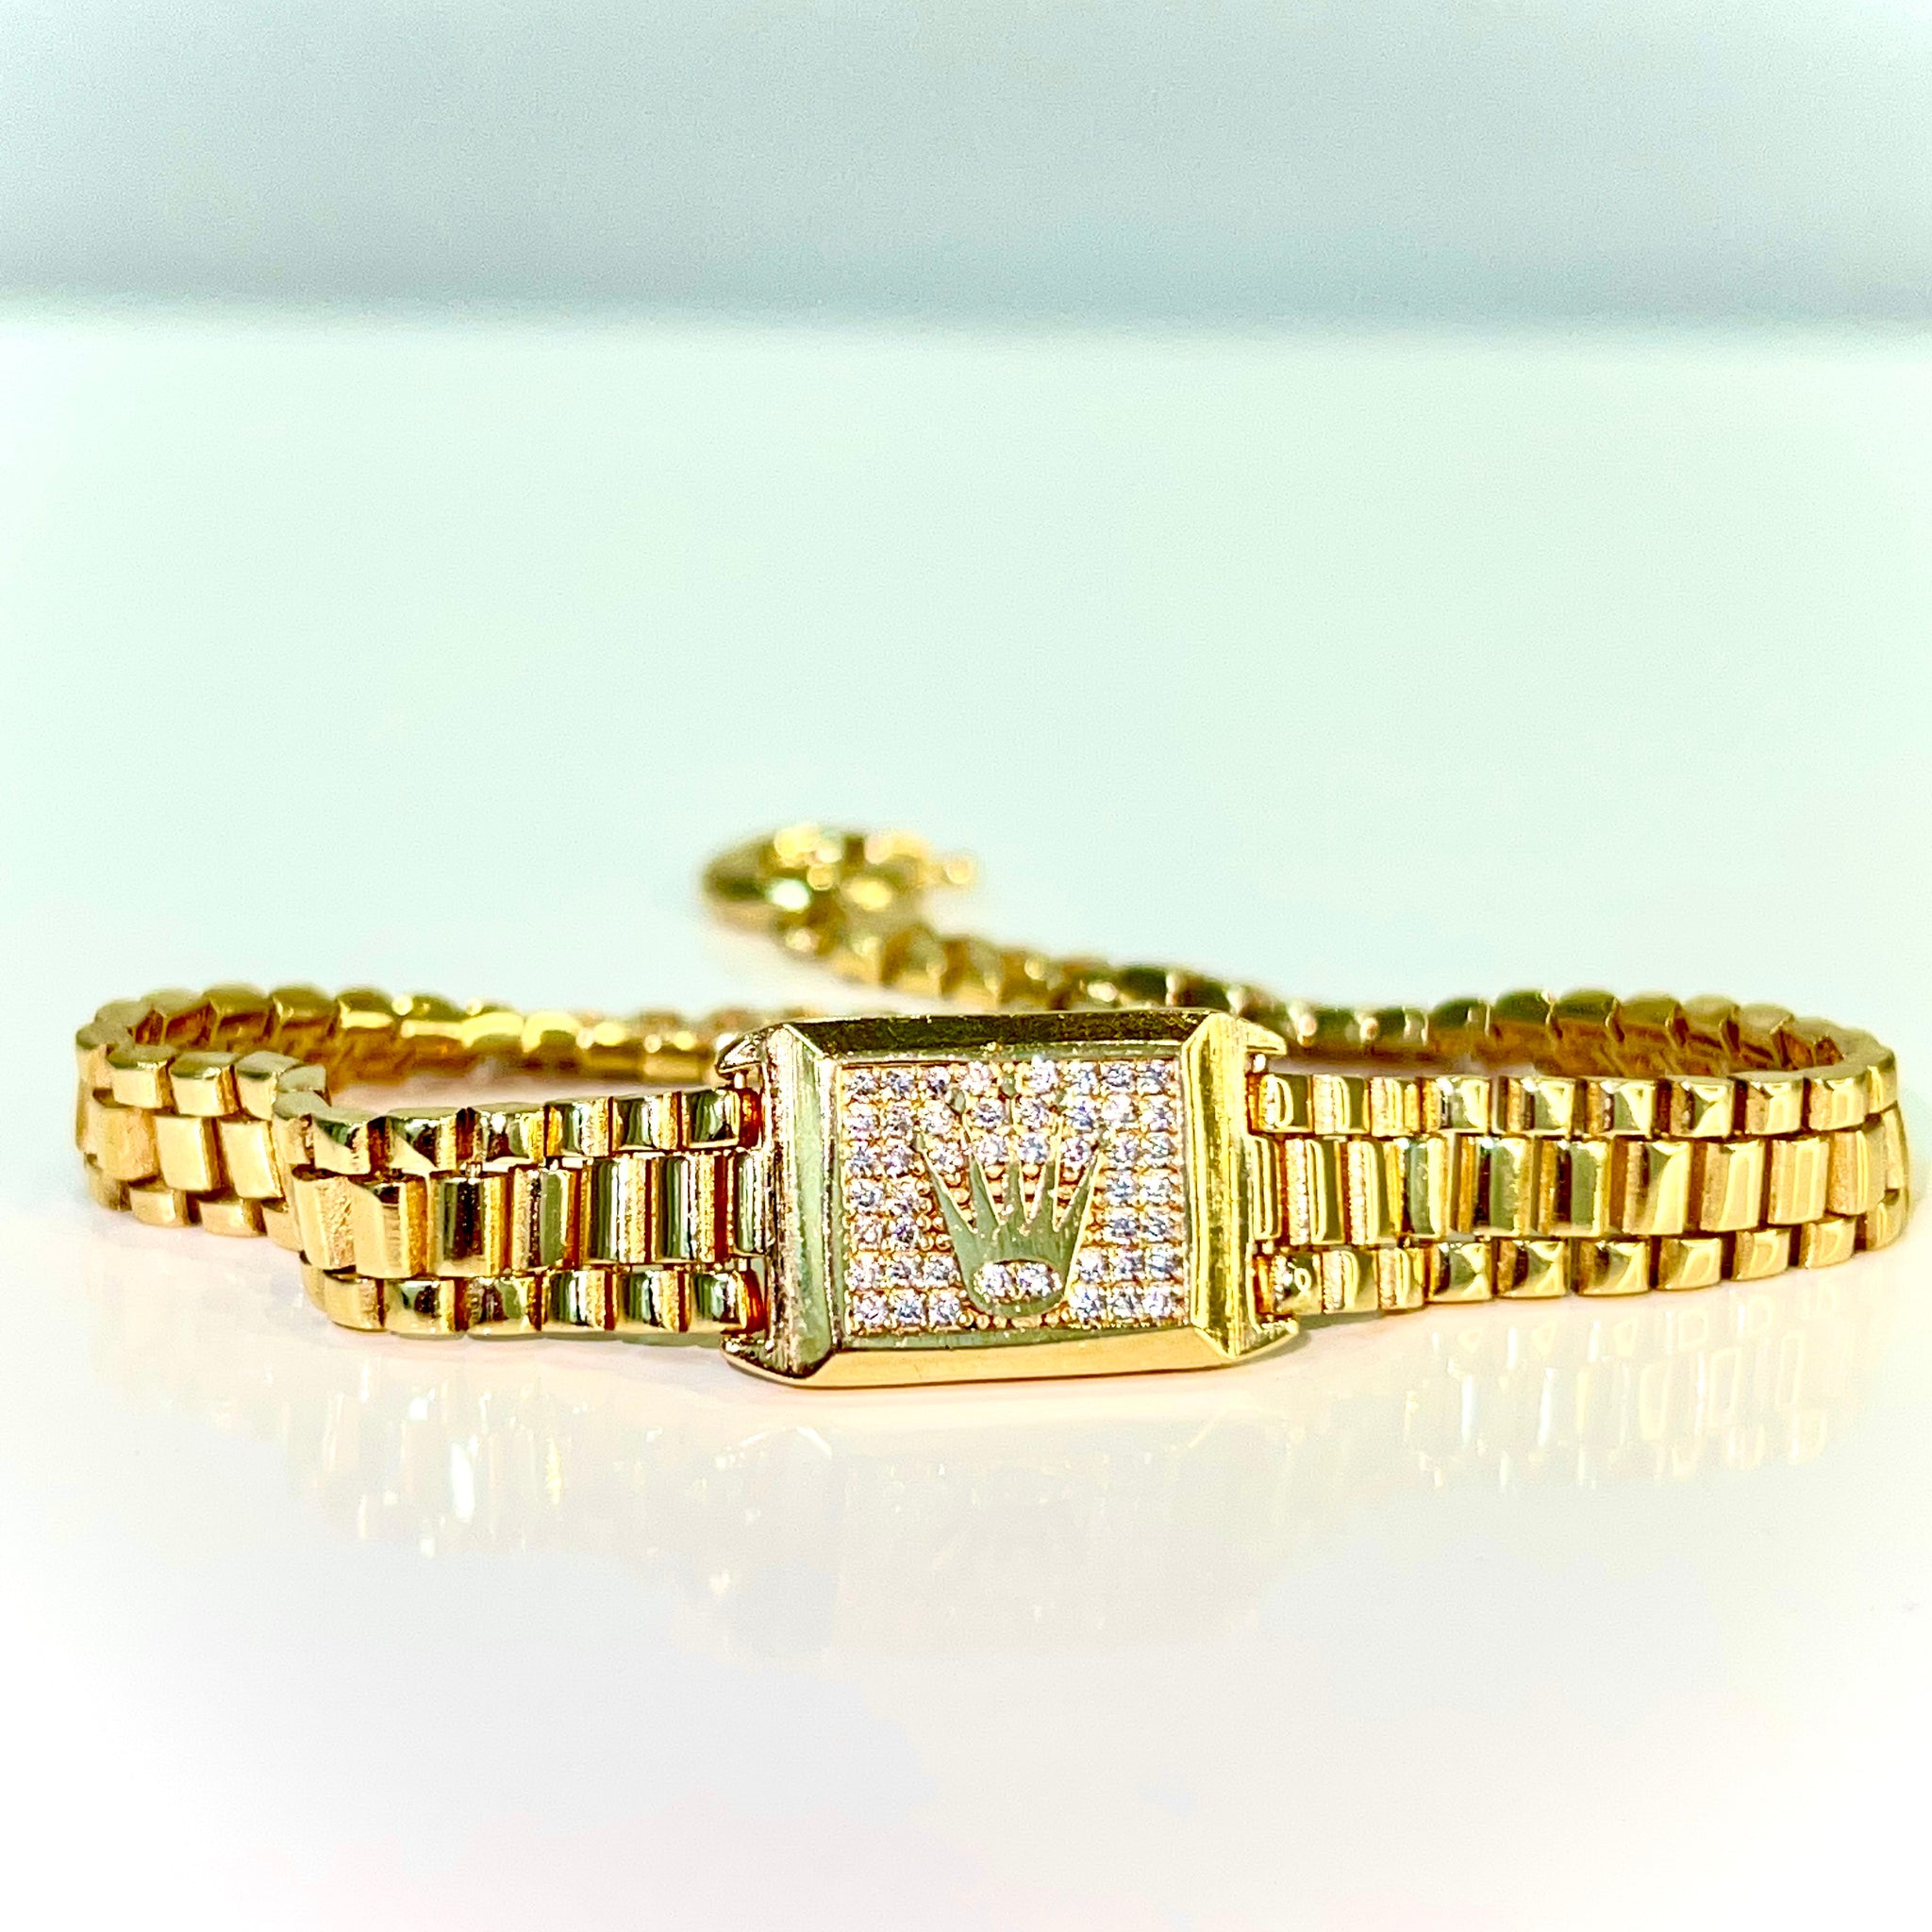 Crown Bracelet - 14 carat gold - 21cm / 12mm